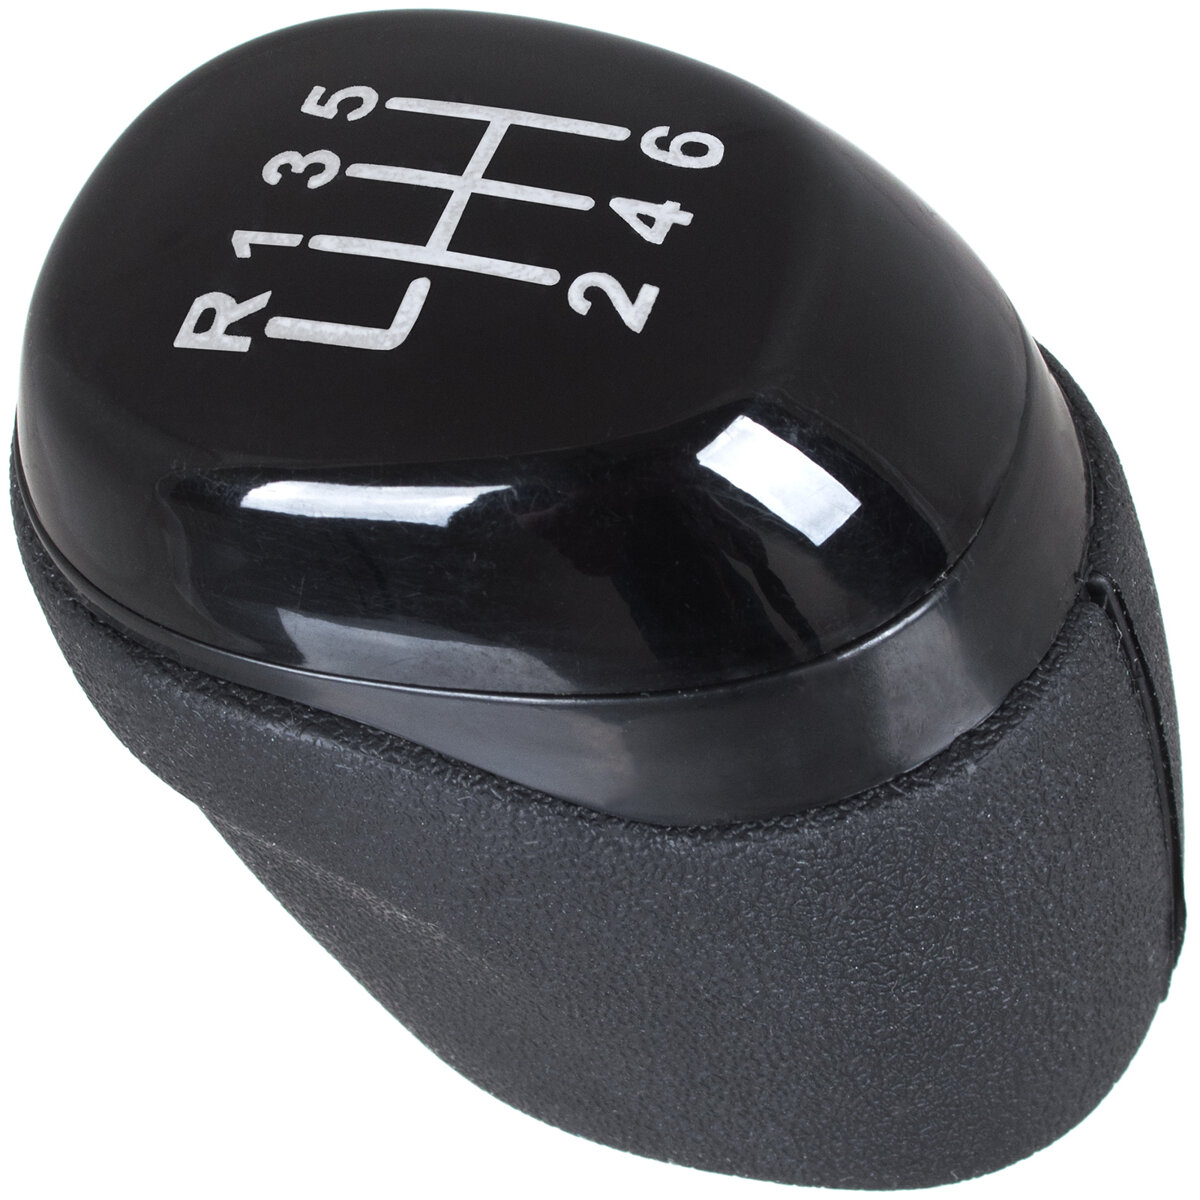 For Renault Megane IV Scenic IV Talisman Kadjar Shift Button Knauf Black  6-Speed